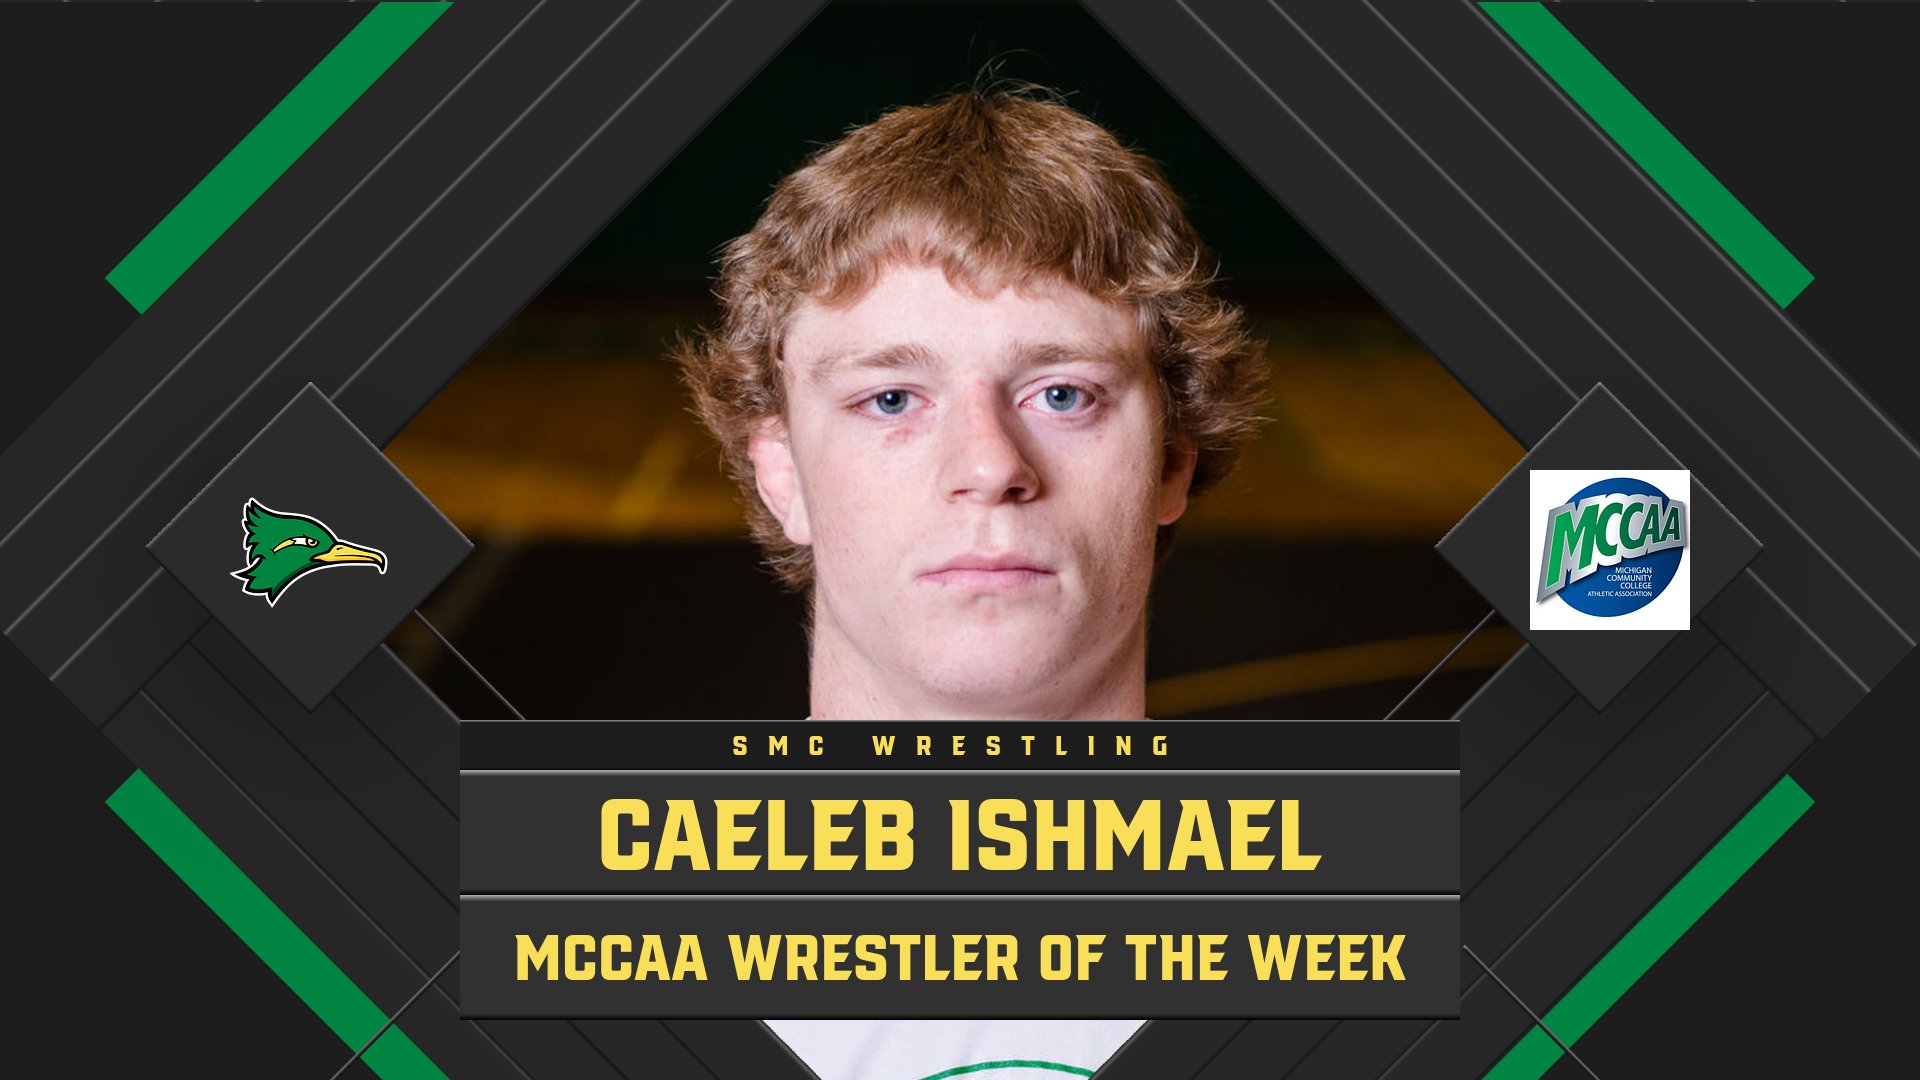 Caeleb Ishmael Wins MCCAA Wrestler of the Week